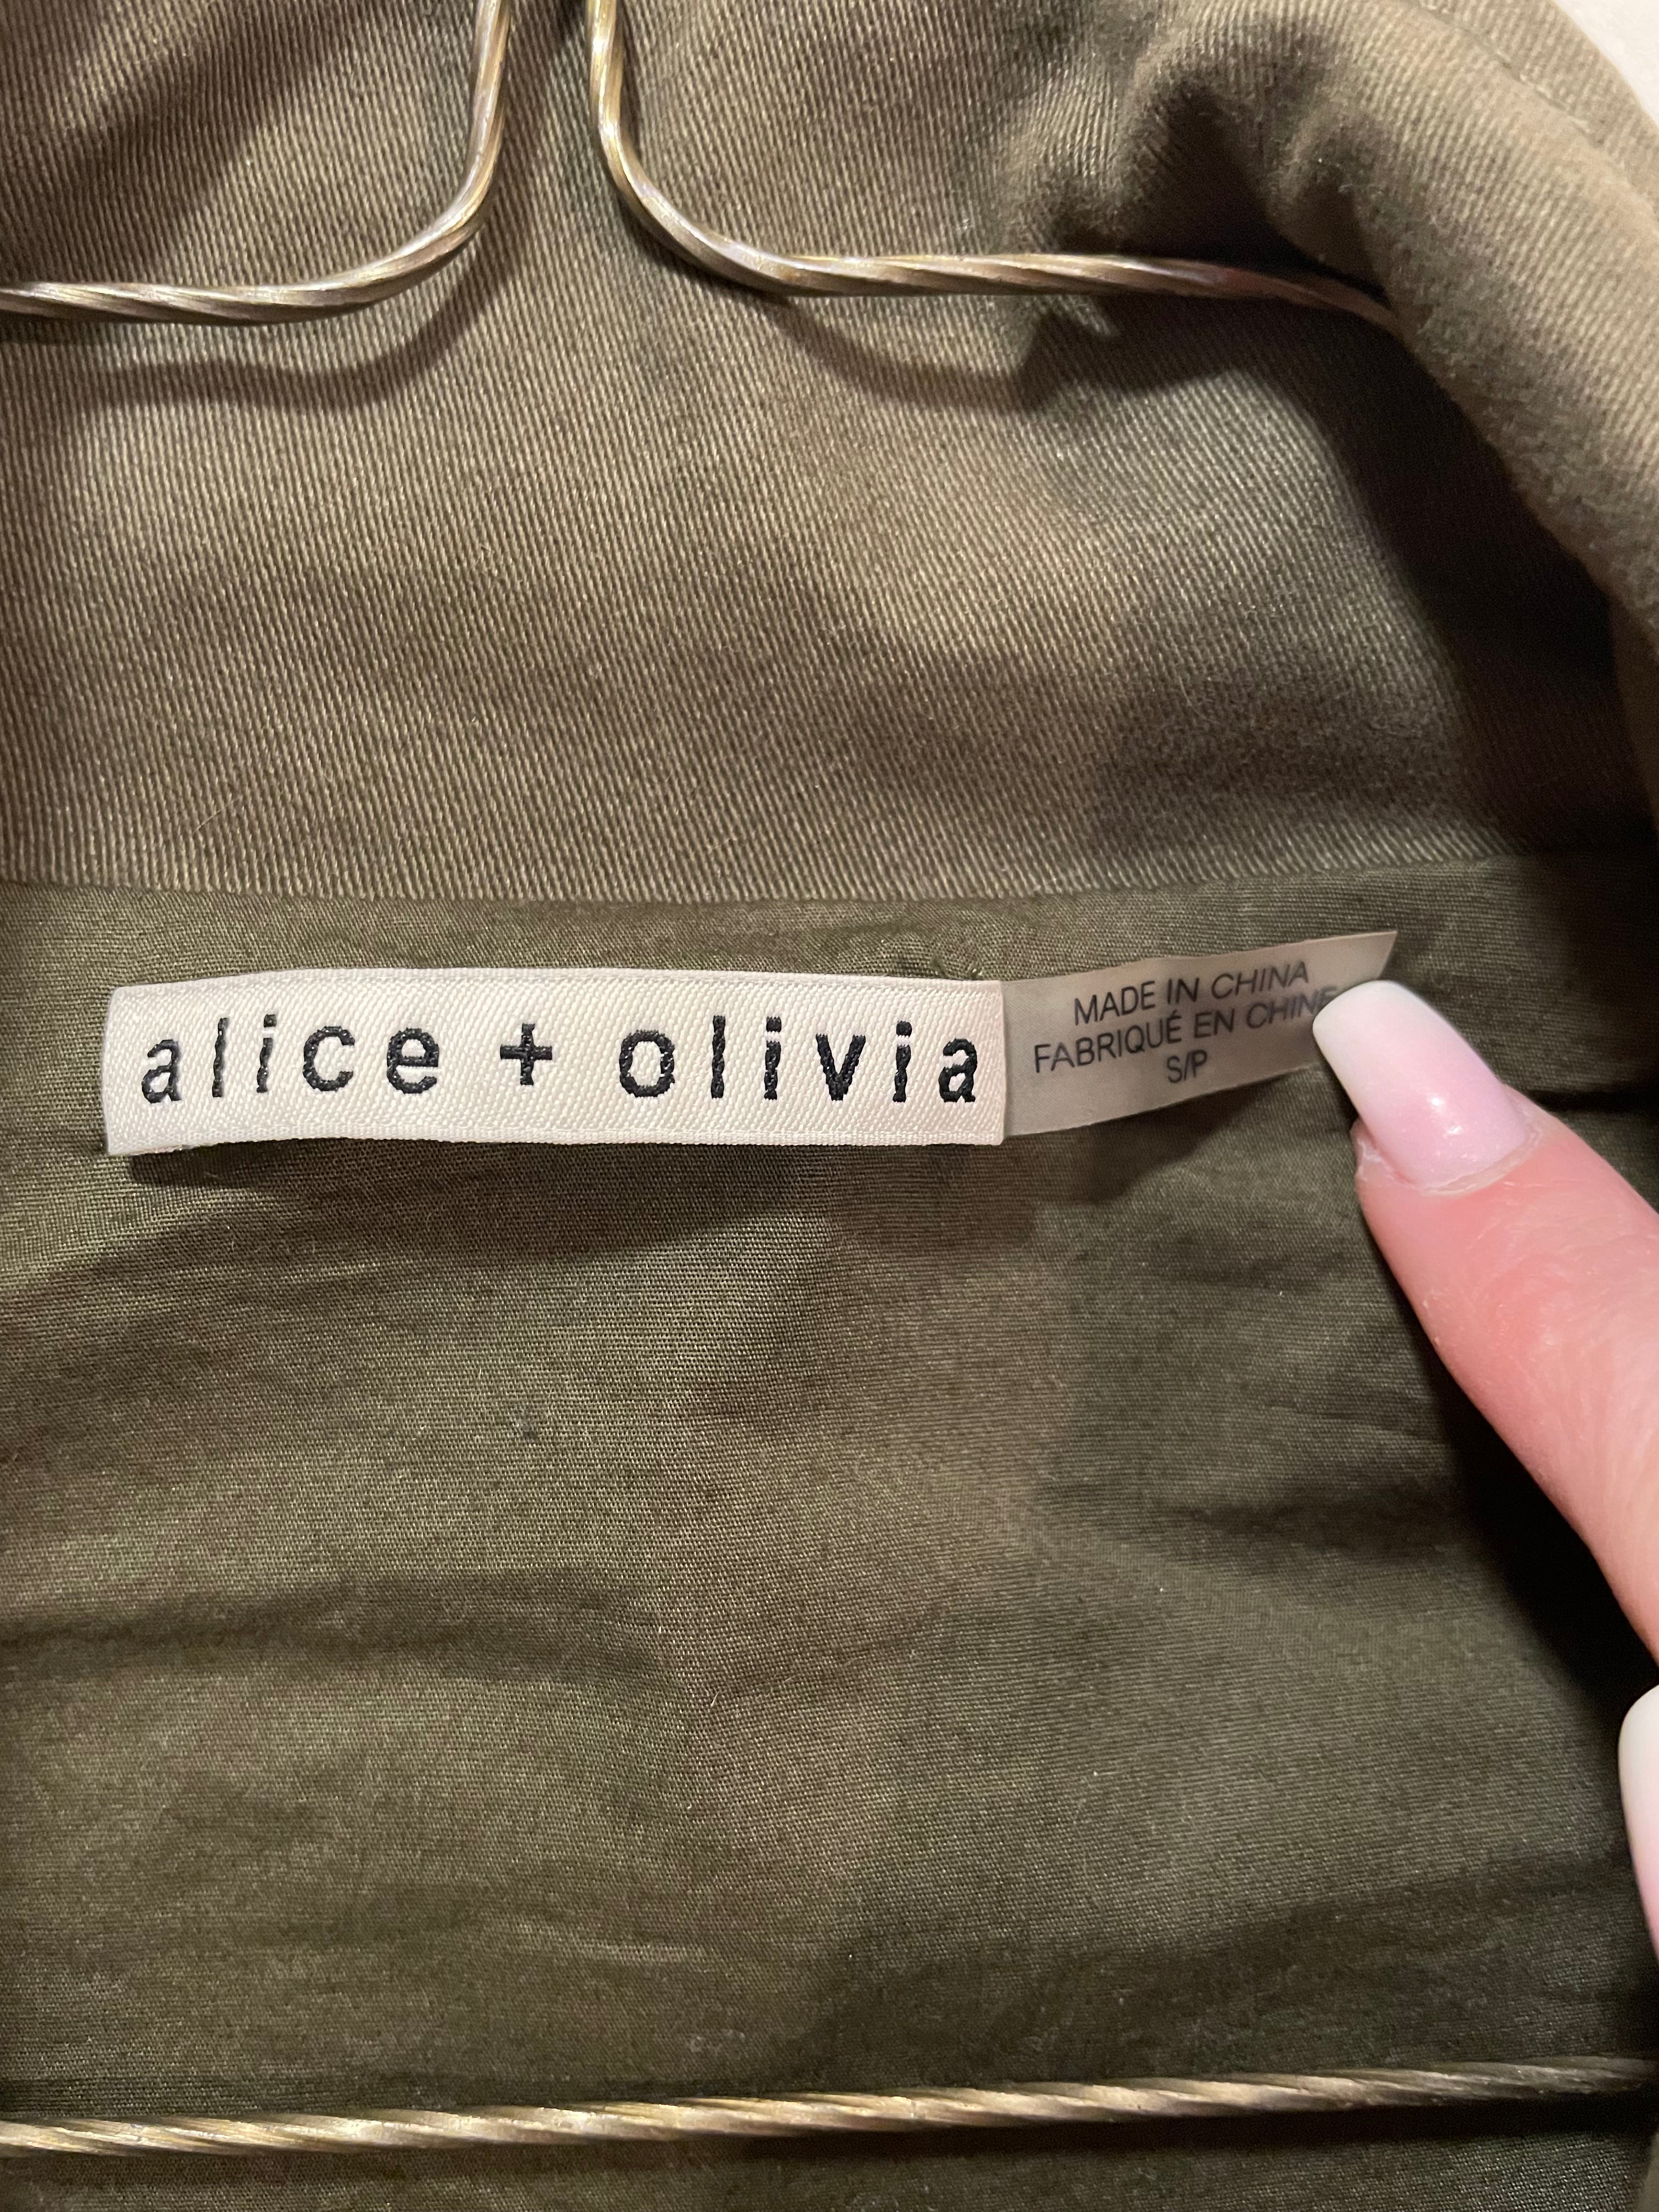 ALICE + OLIVIA “NEVER SAY NEVER” Utility Jacket |Size: S|